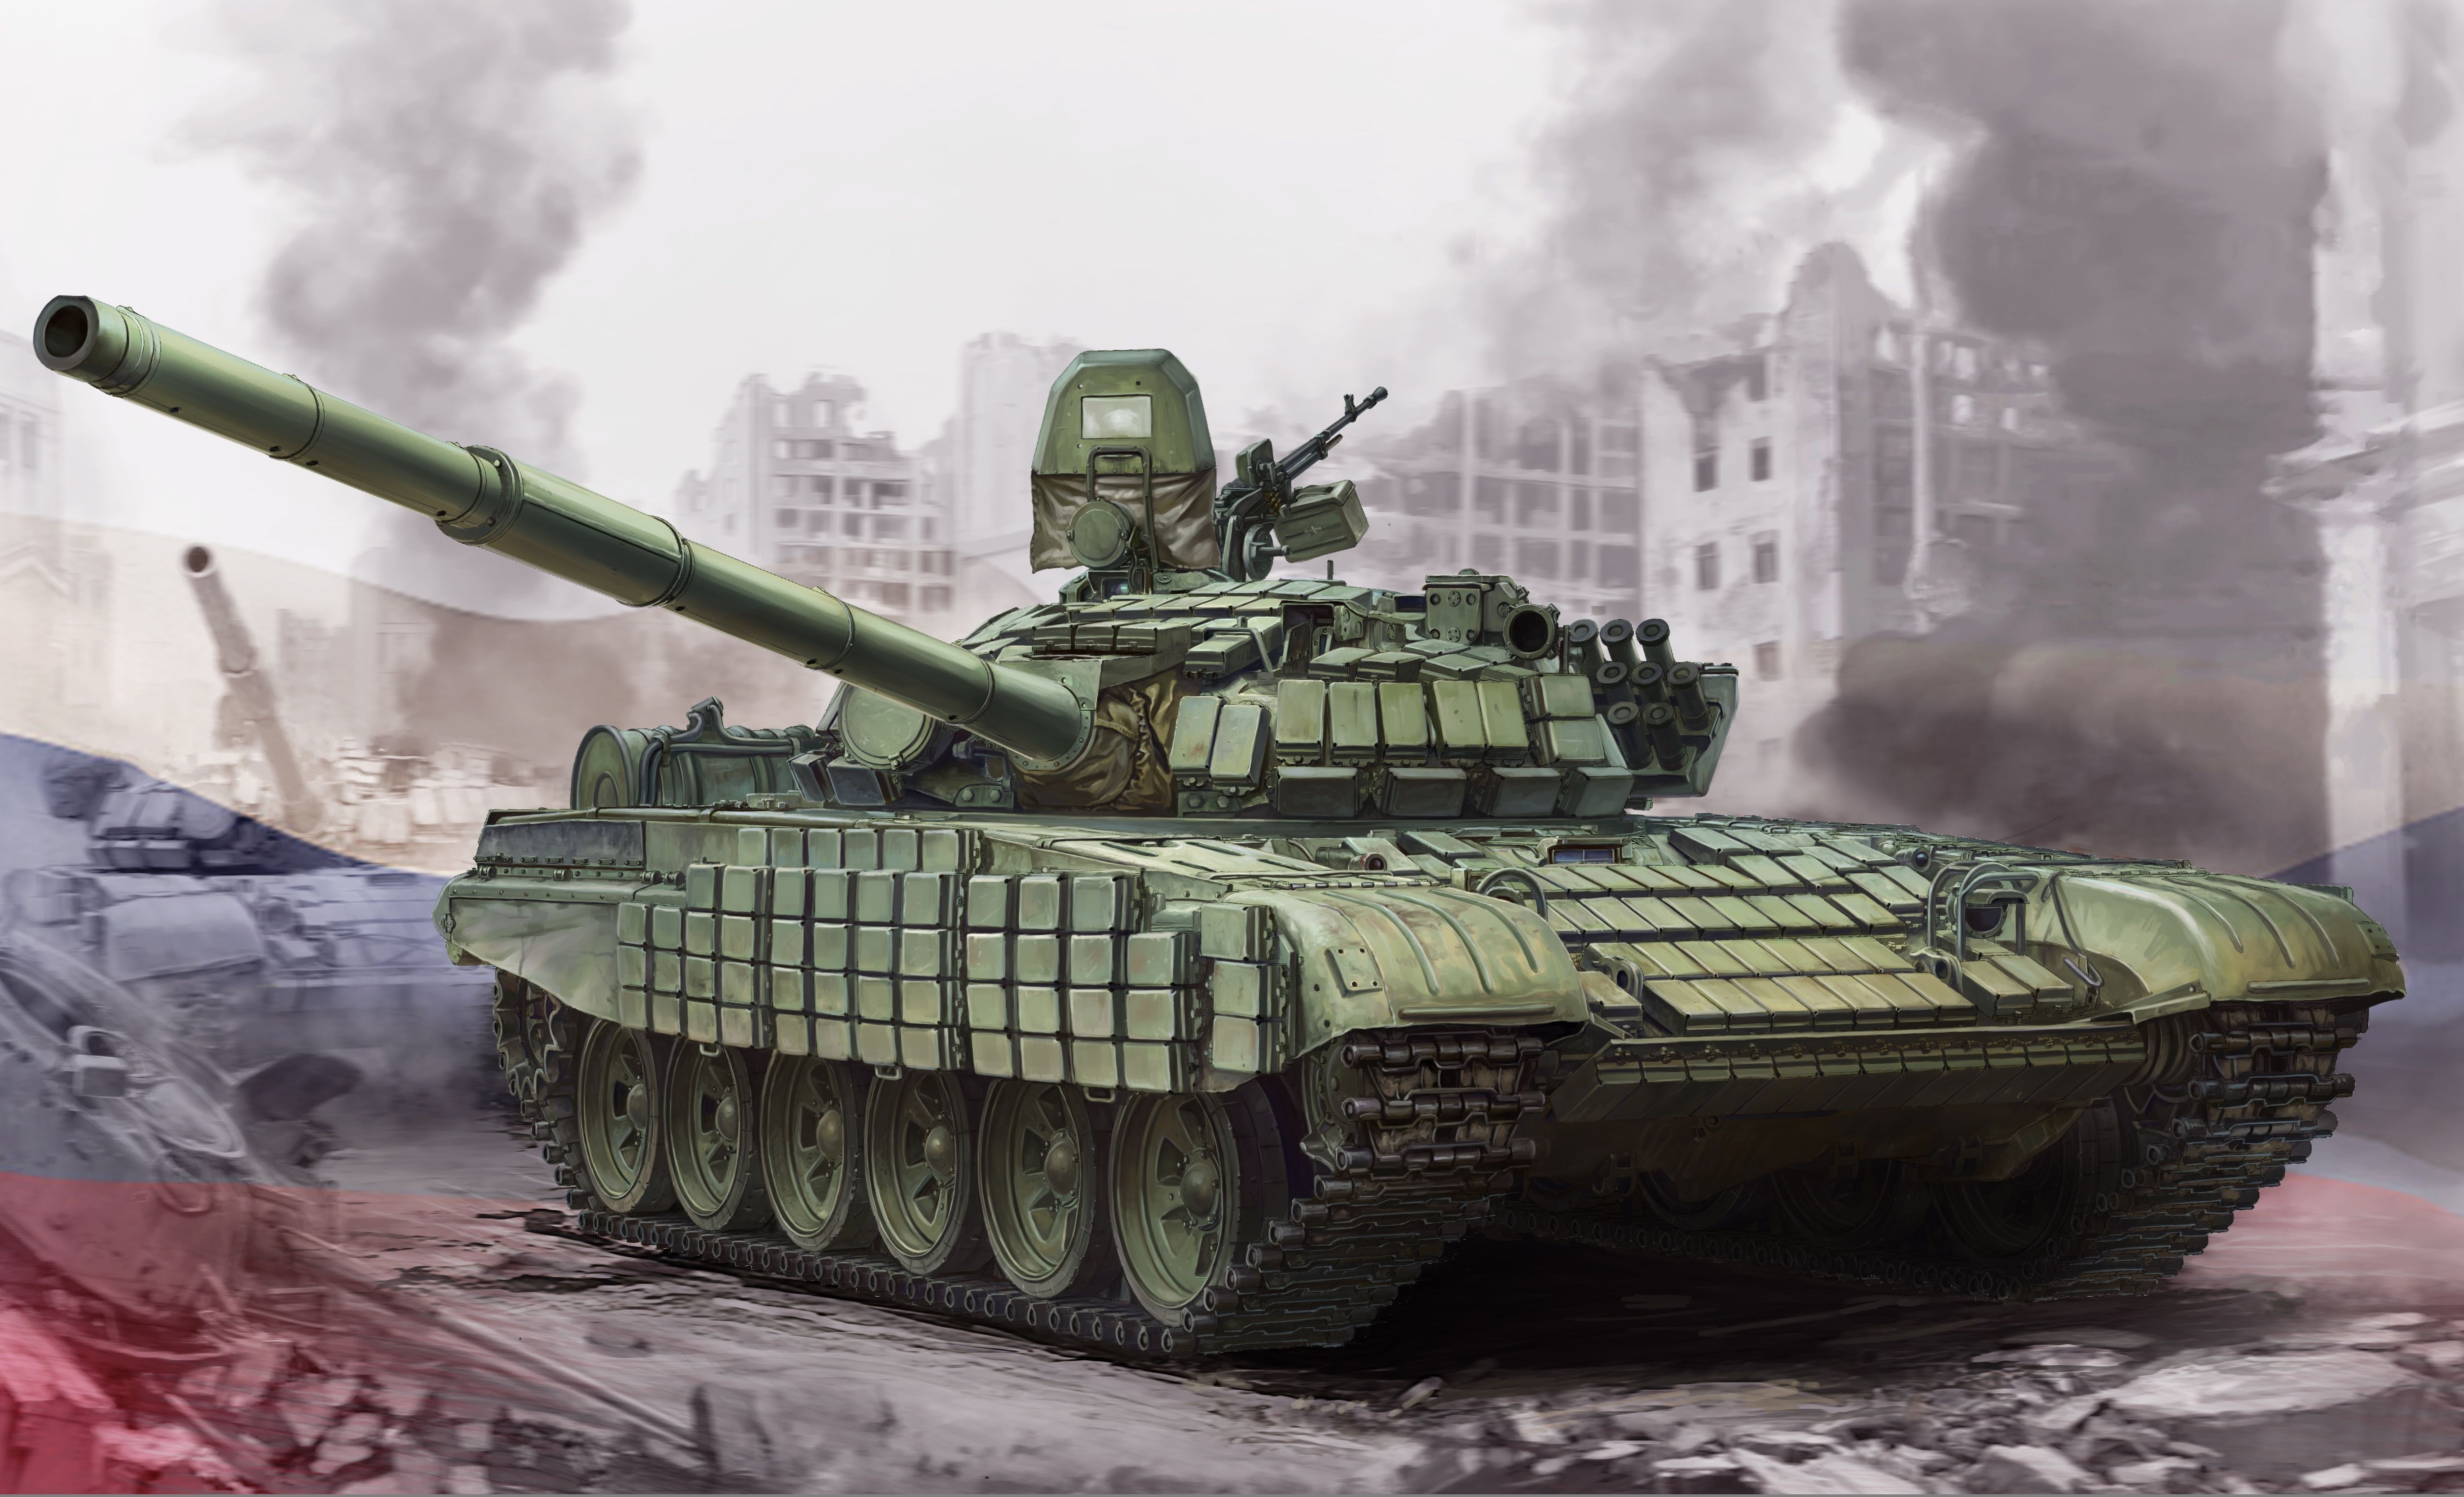 General 5488x3334 tank military ruins smoke gun